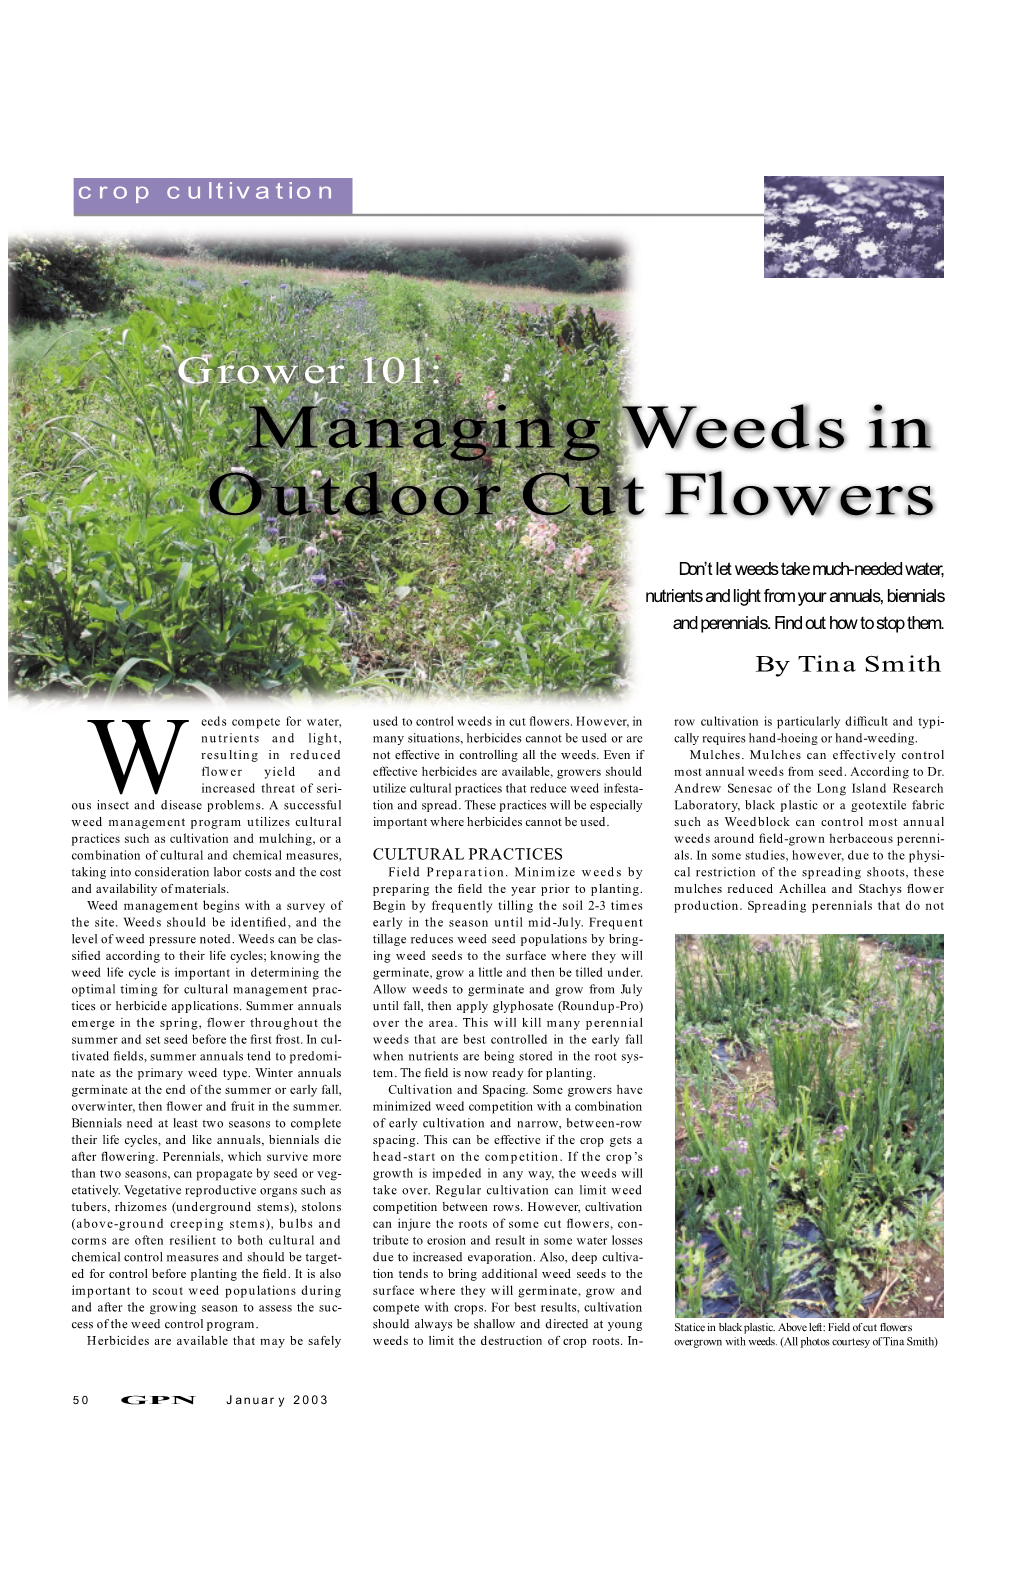 Managing Weeds in Outdoor Cut Flowers